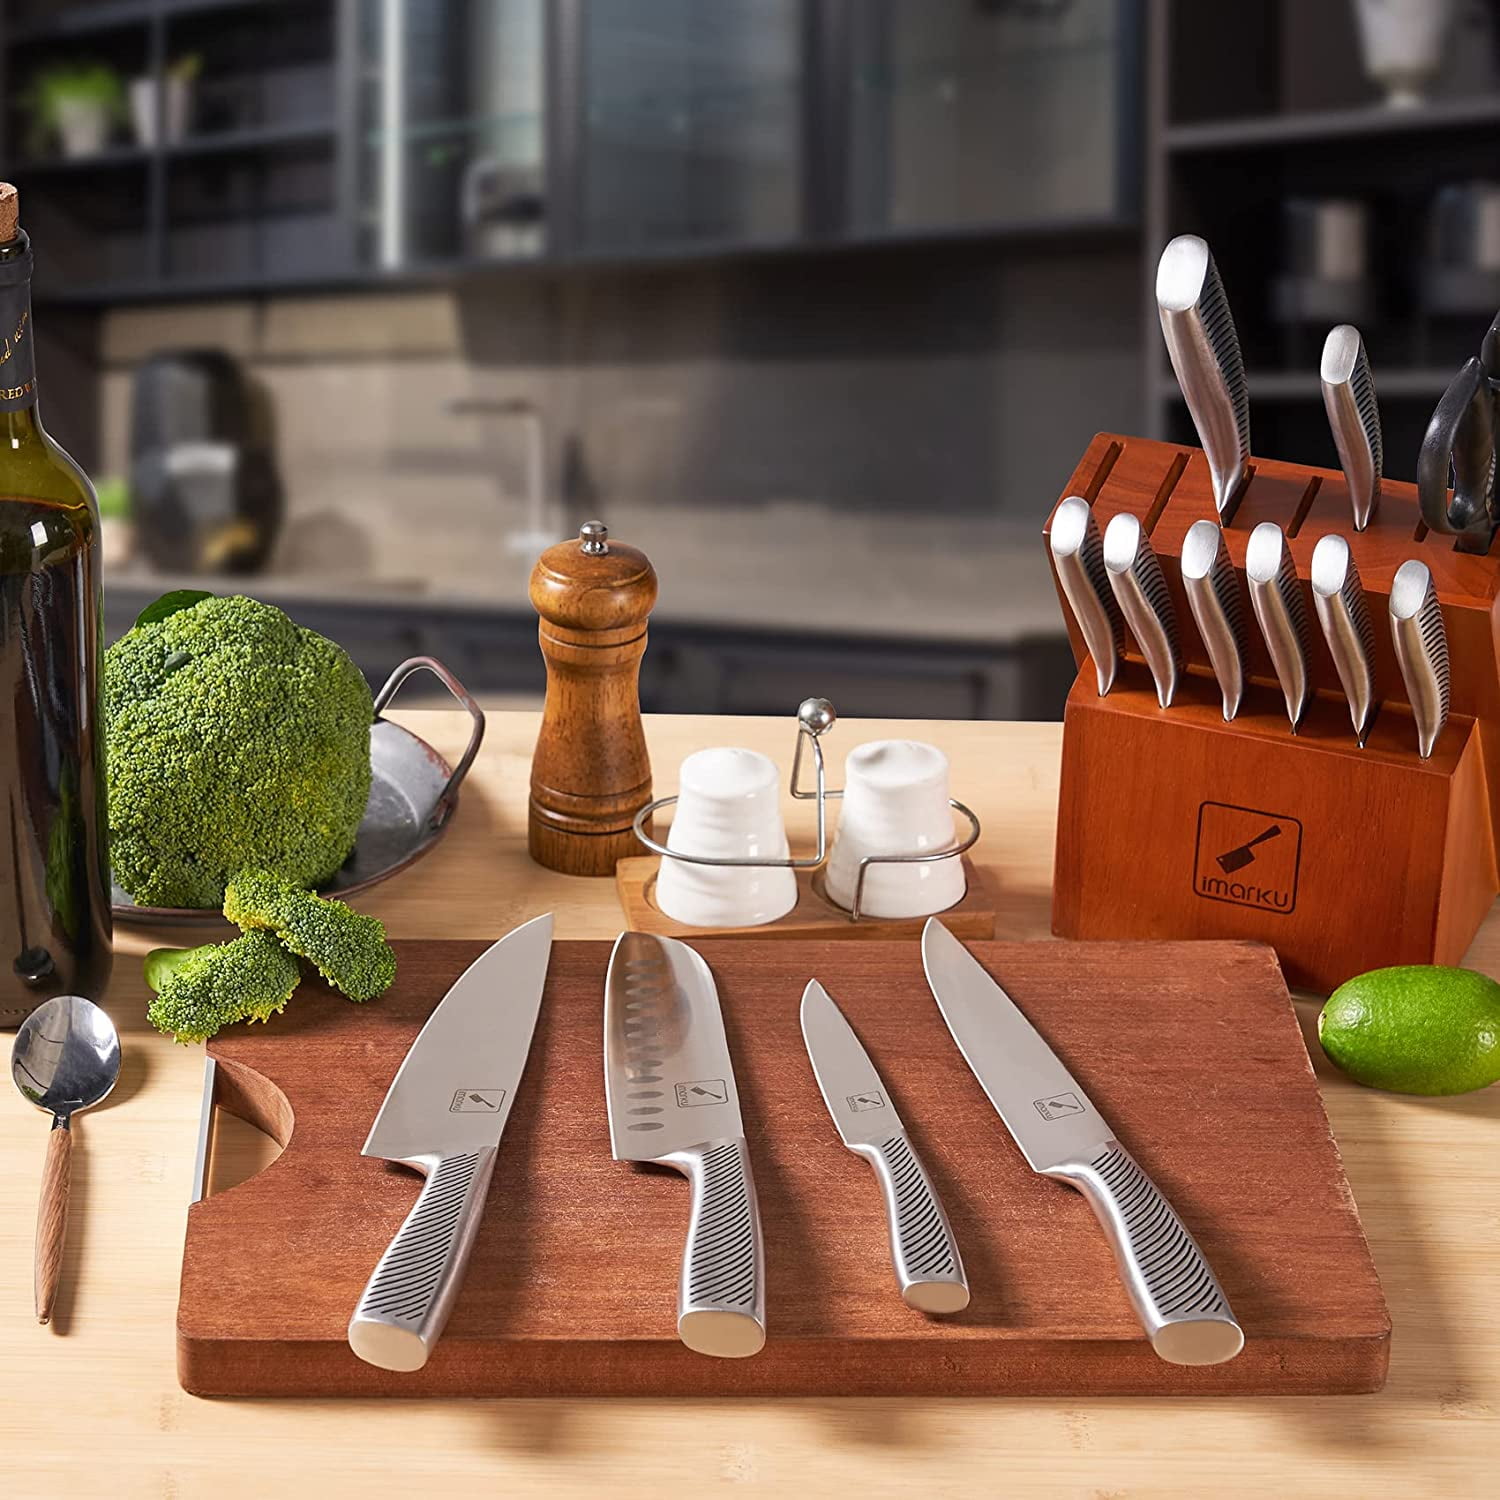 Kitchen Knife Set, imarku Knife Set with Block,14-Piece Premium